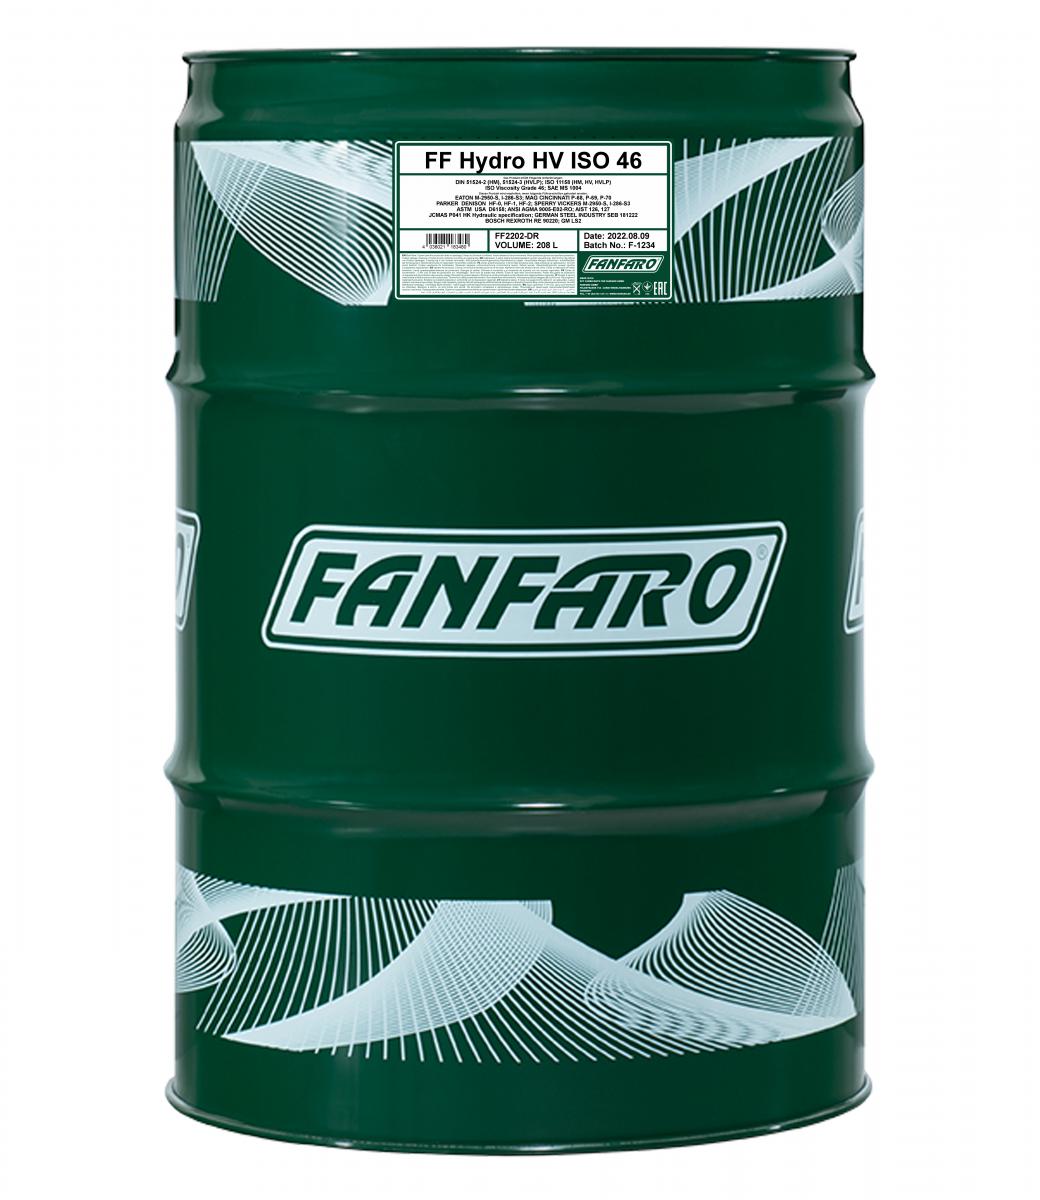 FANFARO HYDRO HV ISO 46